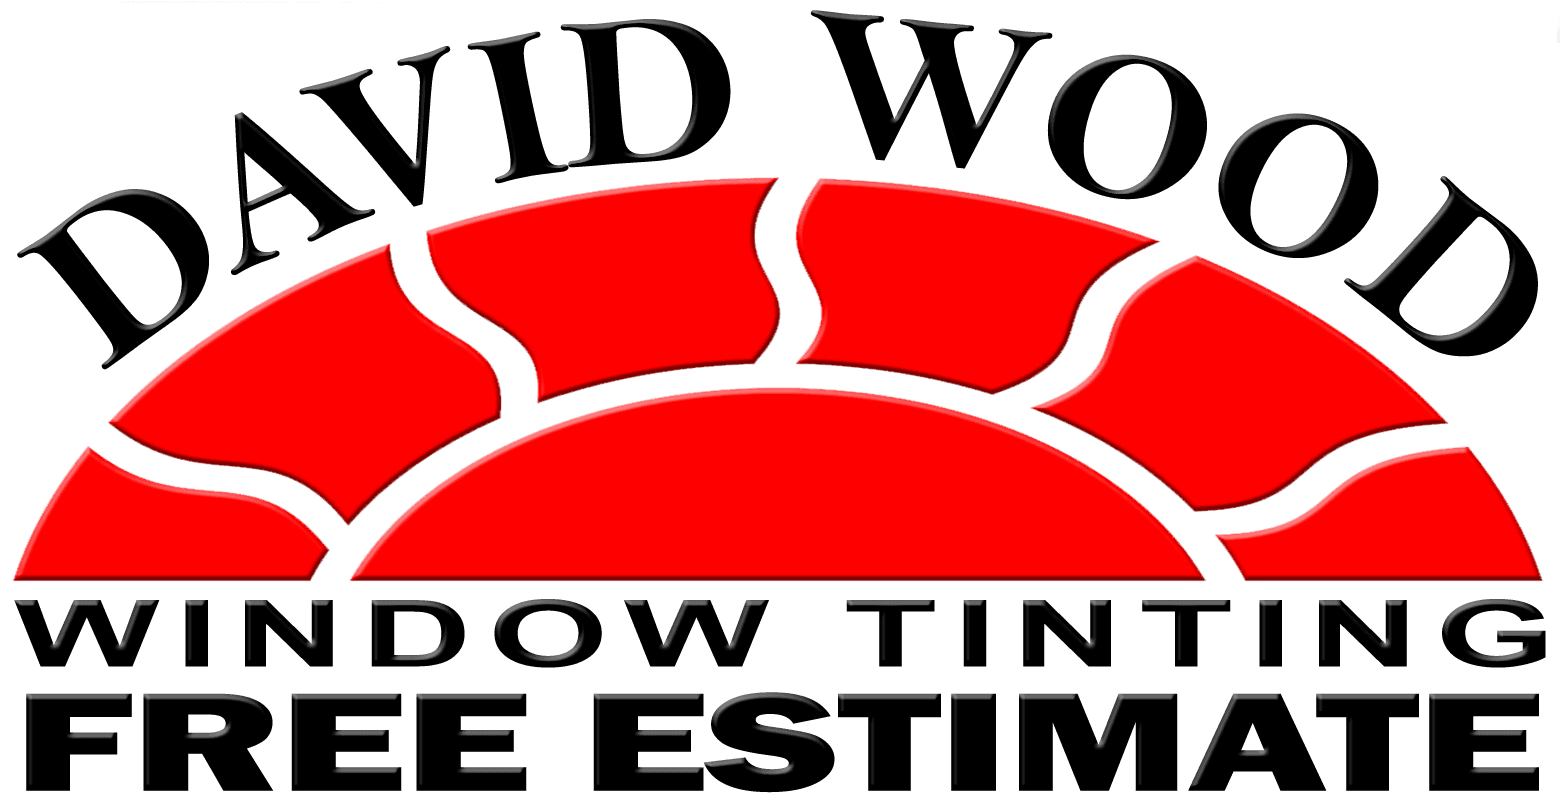 David wood window tinting West Palm Beach